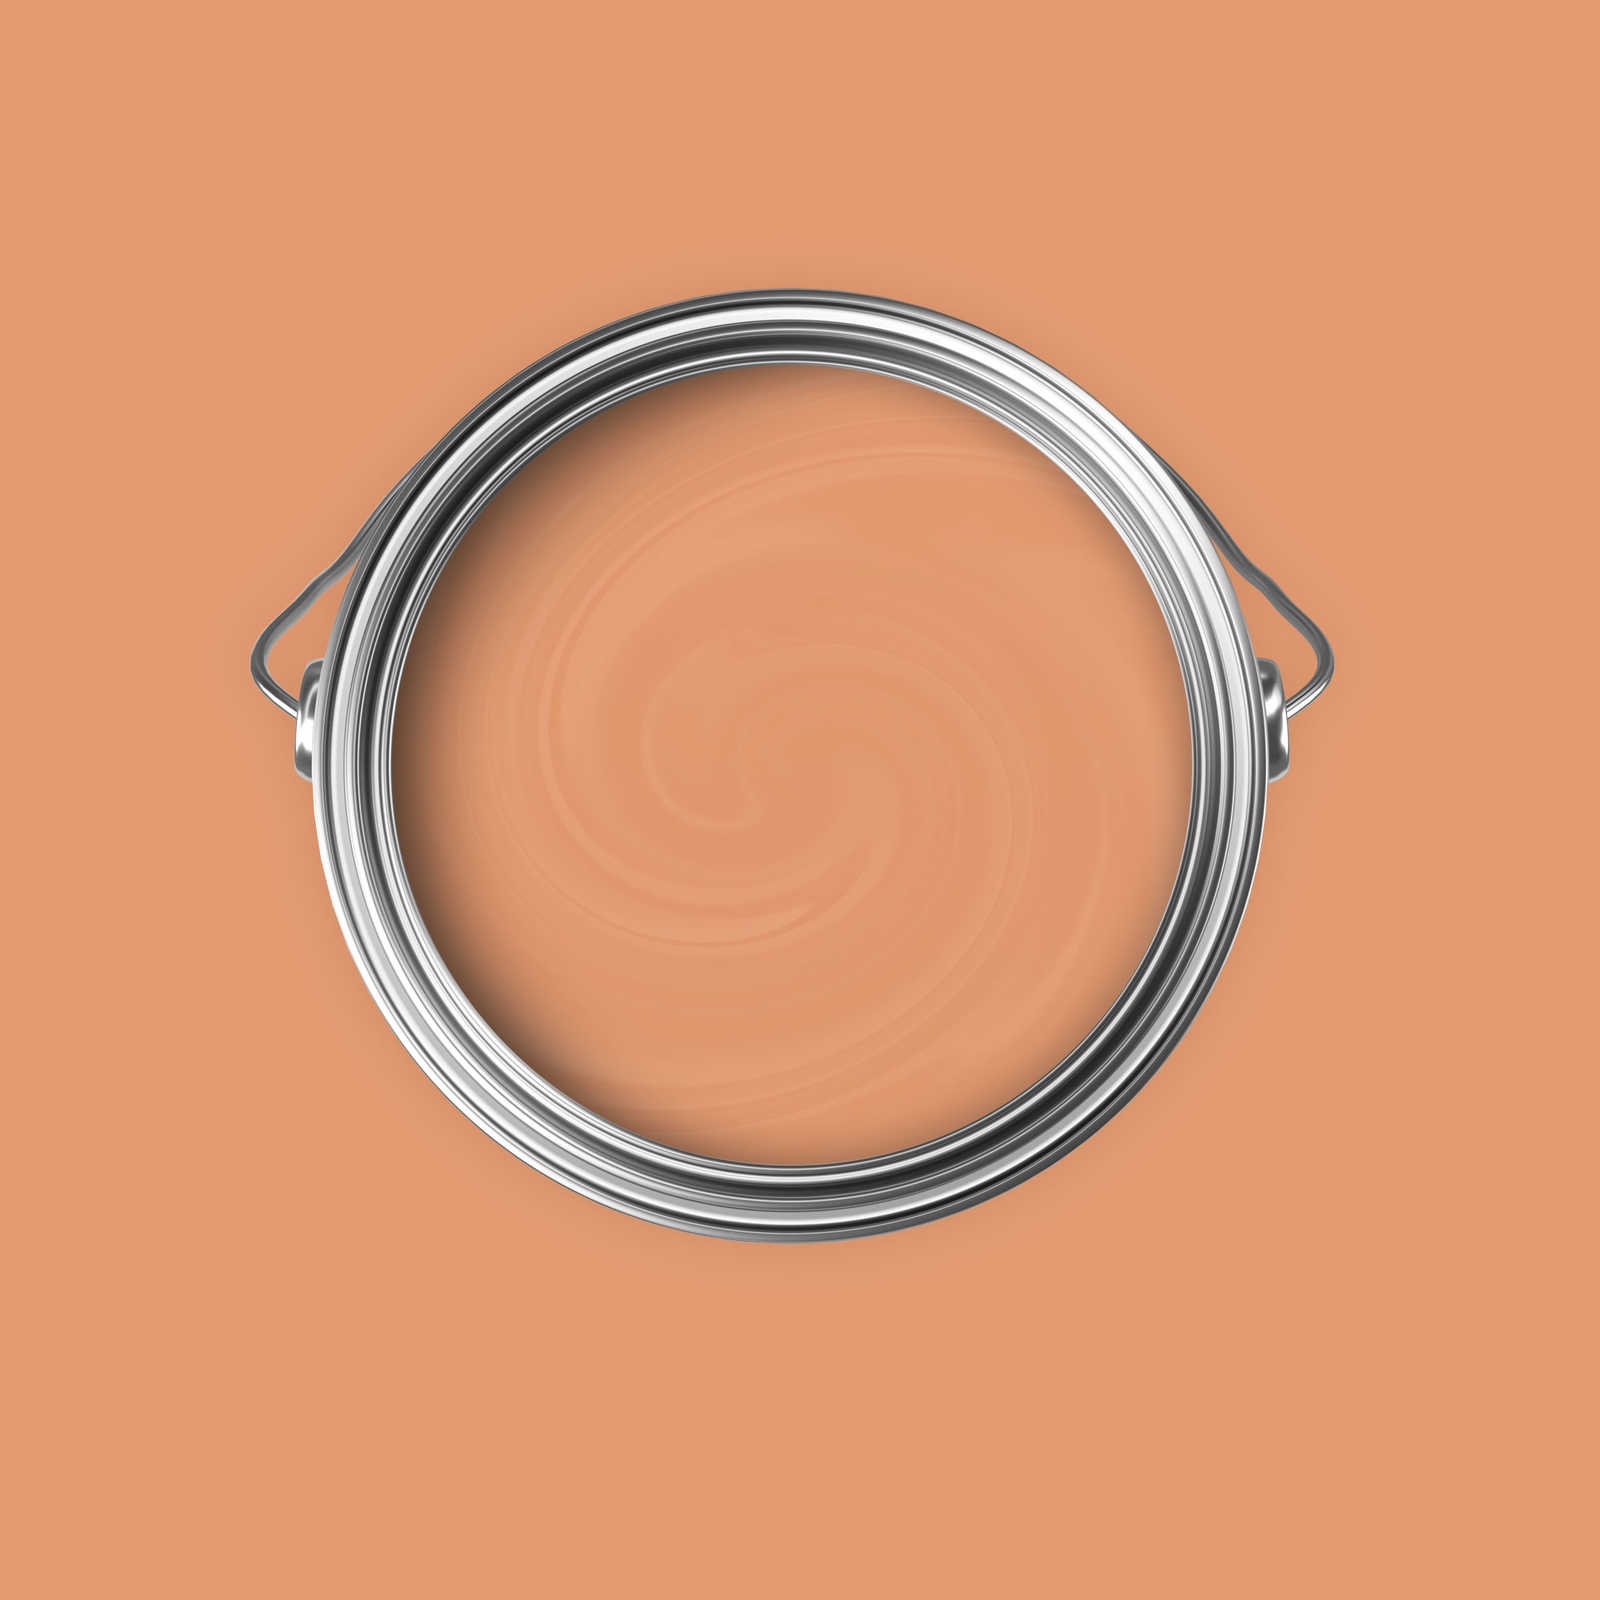             Premium Wall Paint refreshing apricot »Pretty Peach« NW902 – 5 litre
        